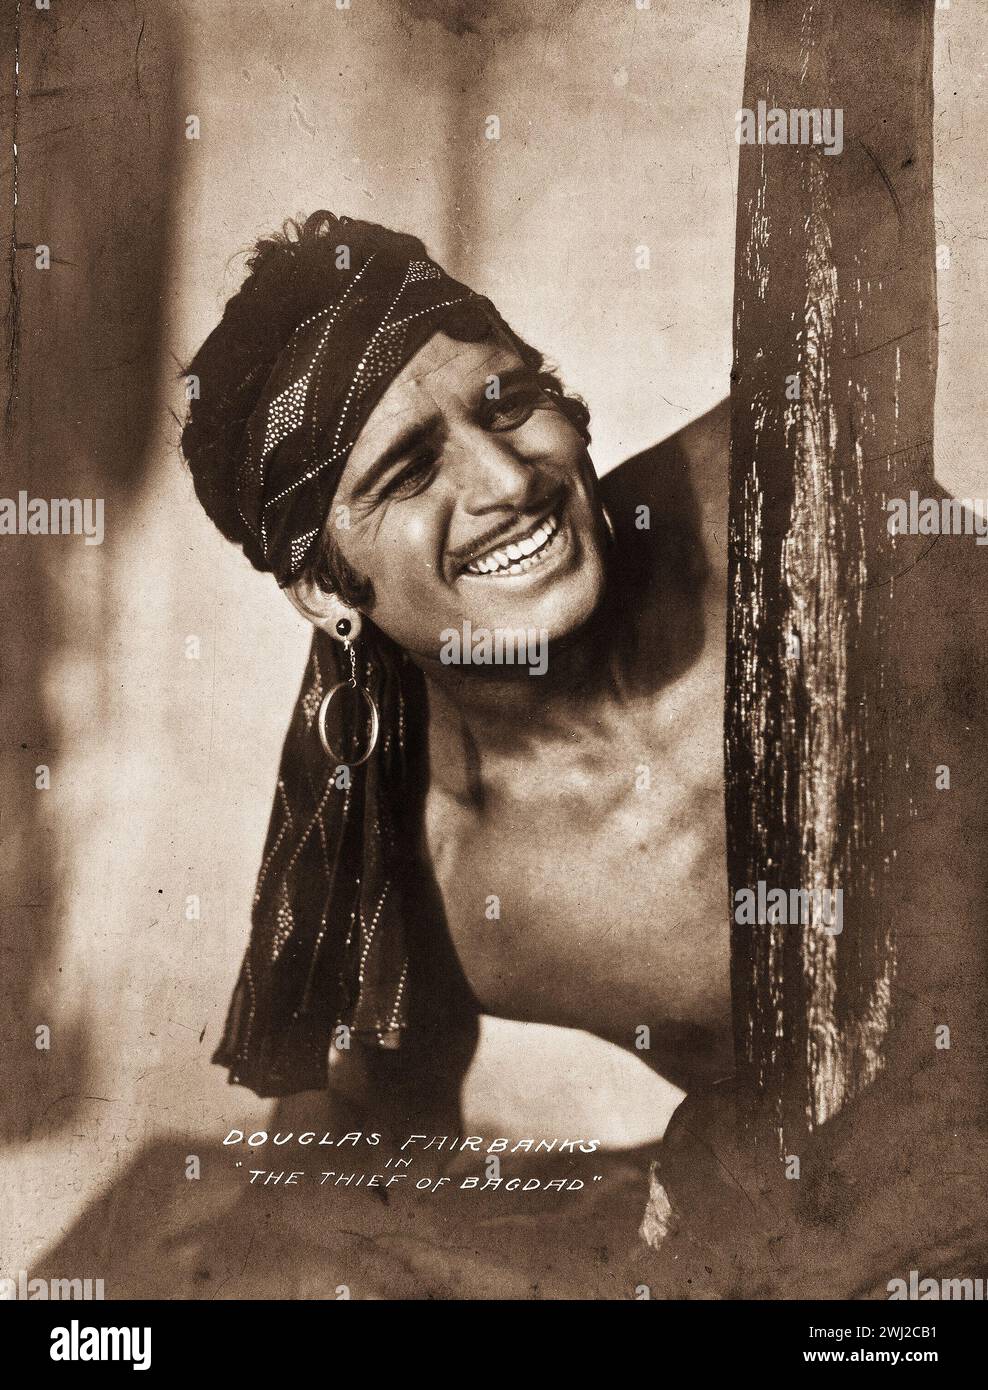 Douglas Fairbanks portrait - The Thief of Bagdad (United Artists, 1924). Publicity photo - sepia Stock Photo